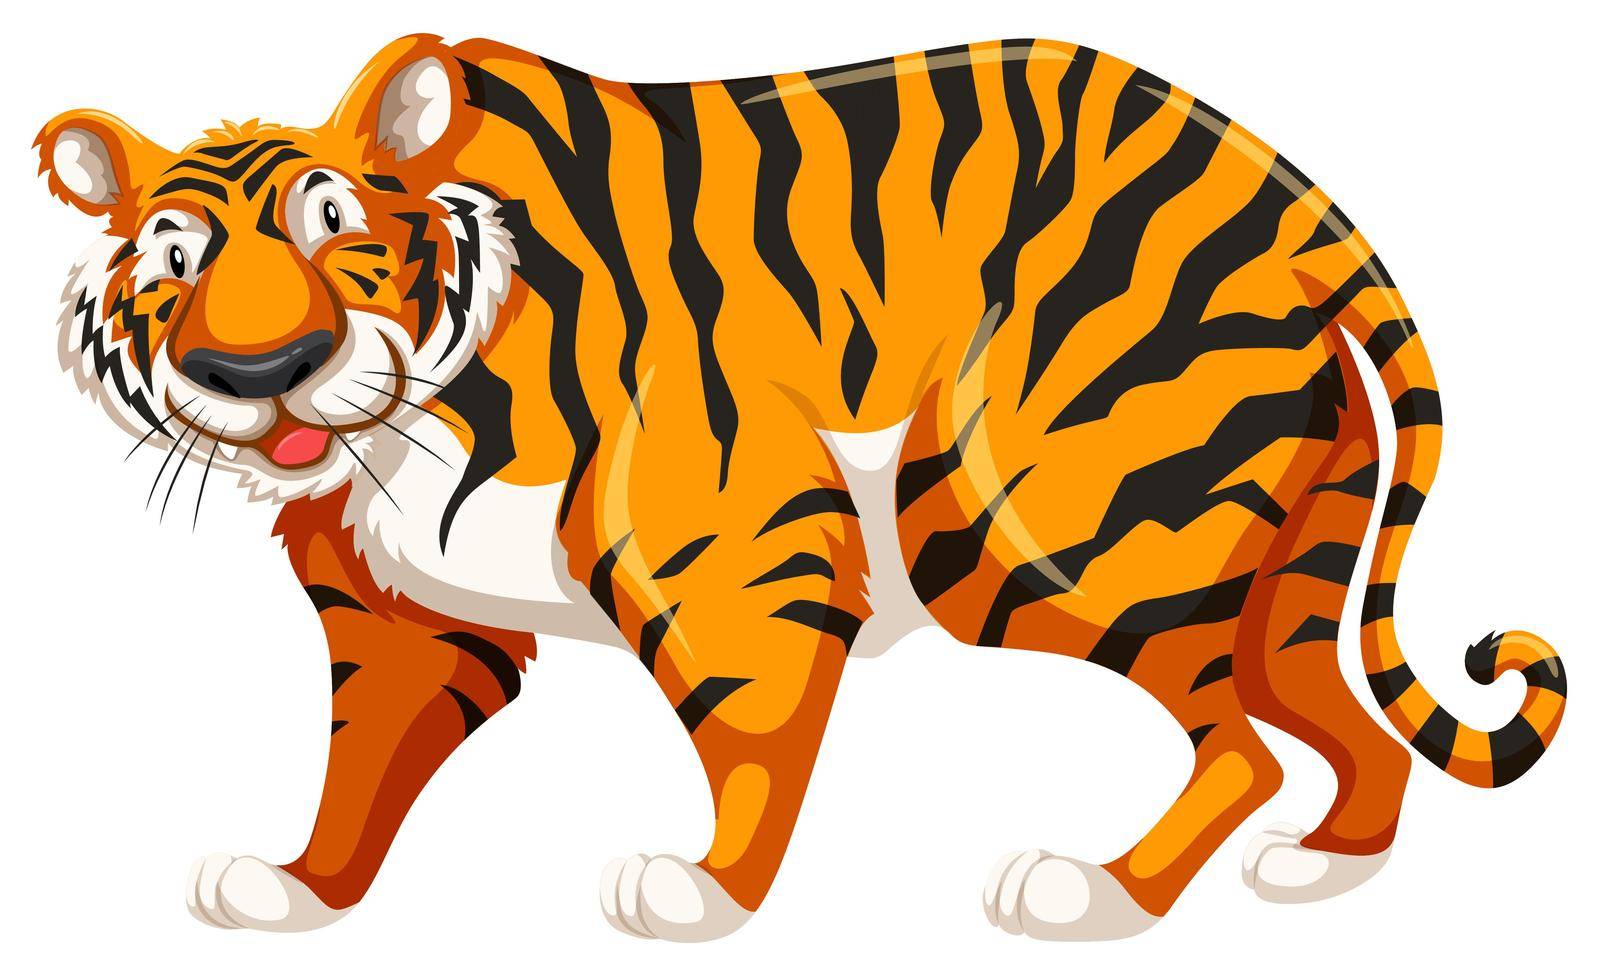 Tiger by iimages